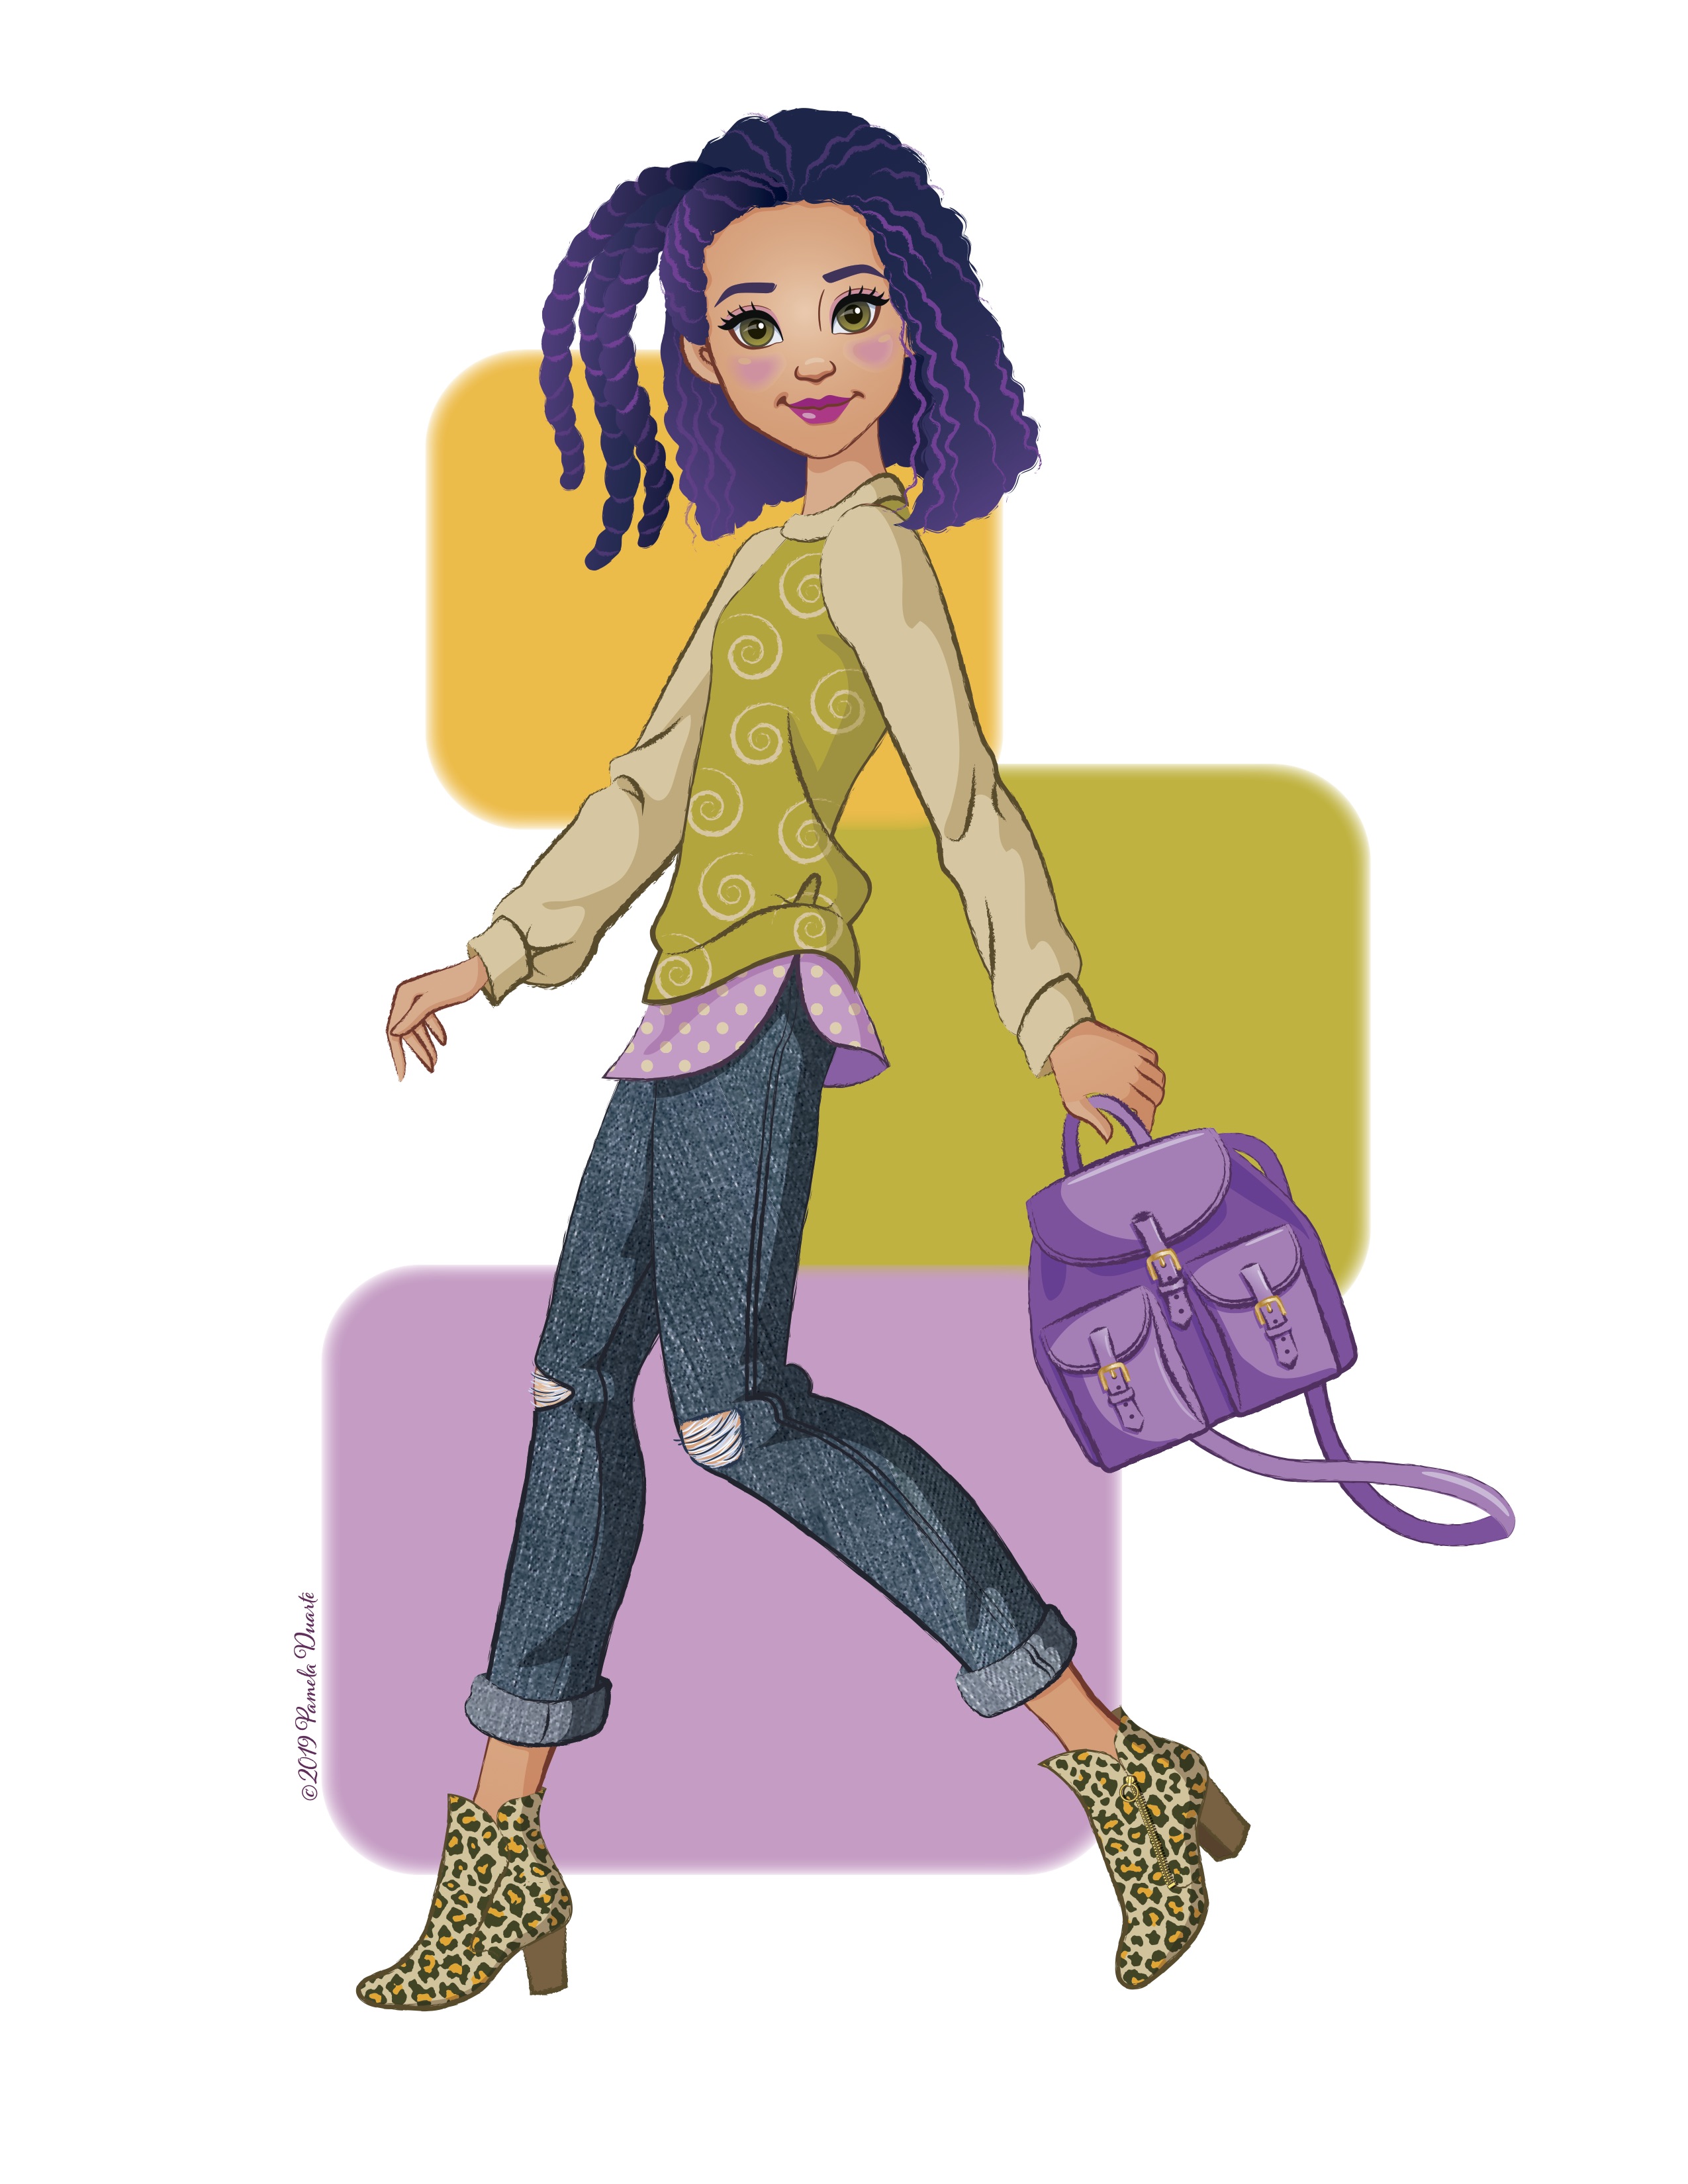 Pamela Duarte Illustration  Teen Figure in Ripped Jeans